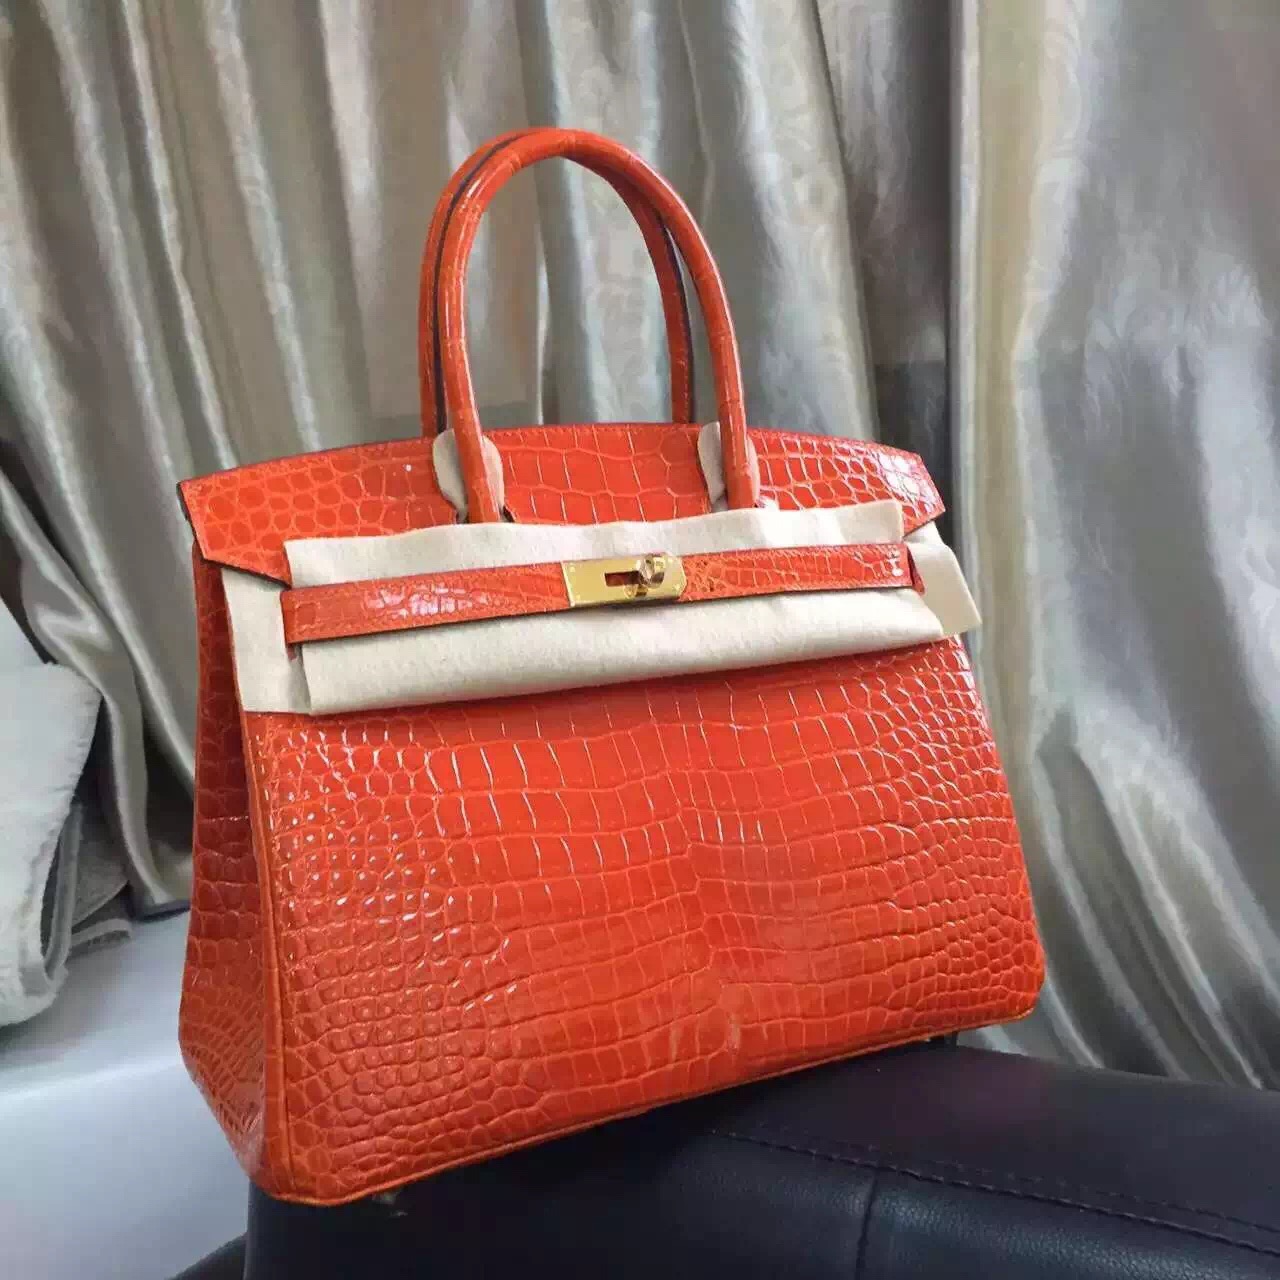 Hermes Custom-made Birkin 30CM Original Crocodile Shiny Leather Tote Bag in Orange